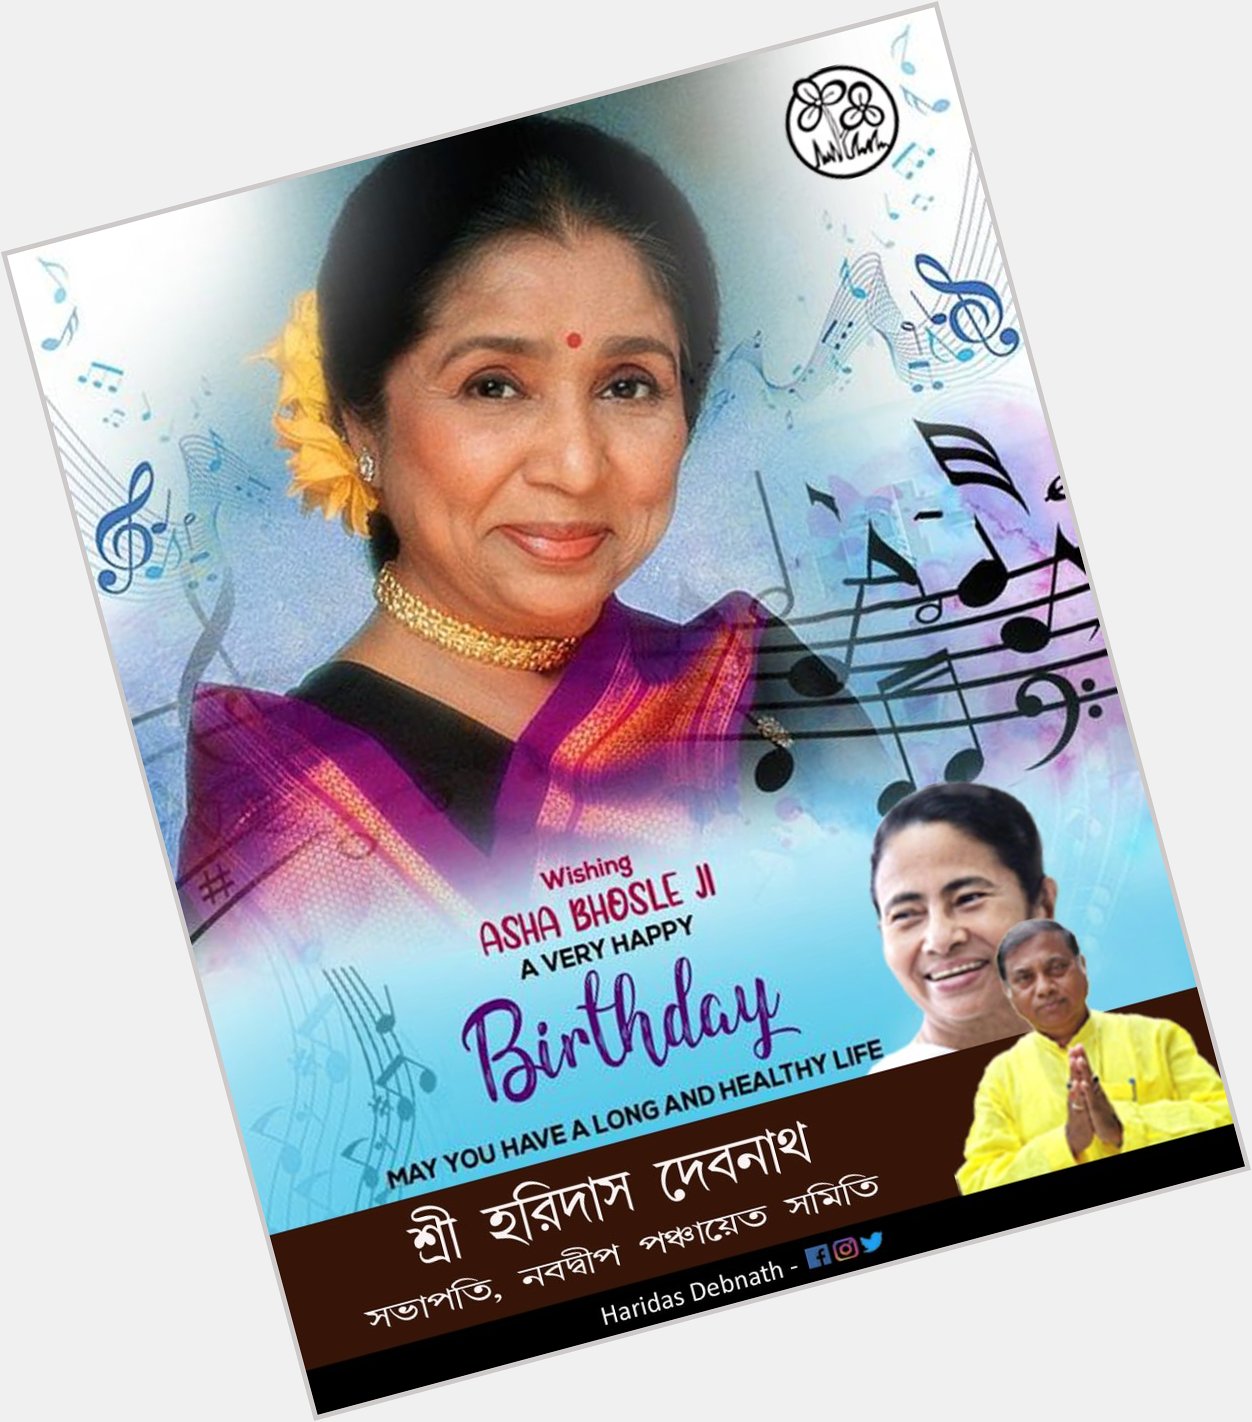 Wishing Asha Bhosle a very happy birthday! 